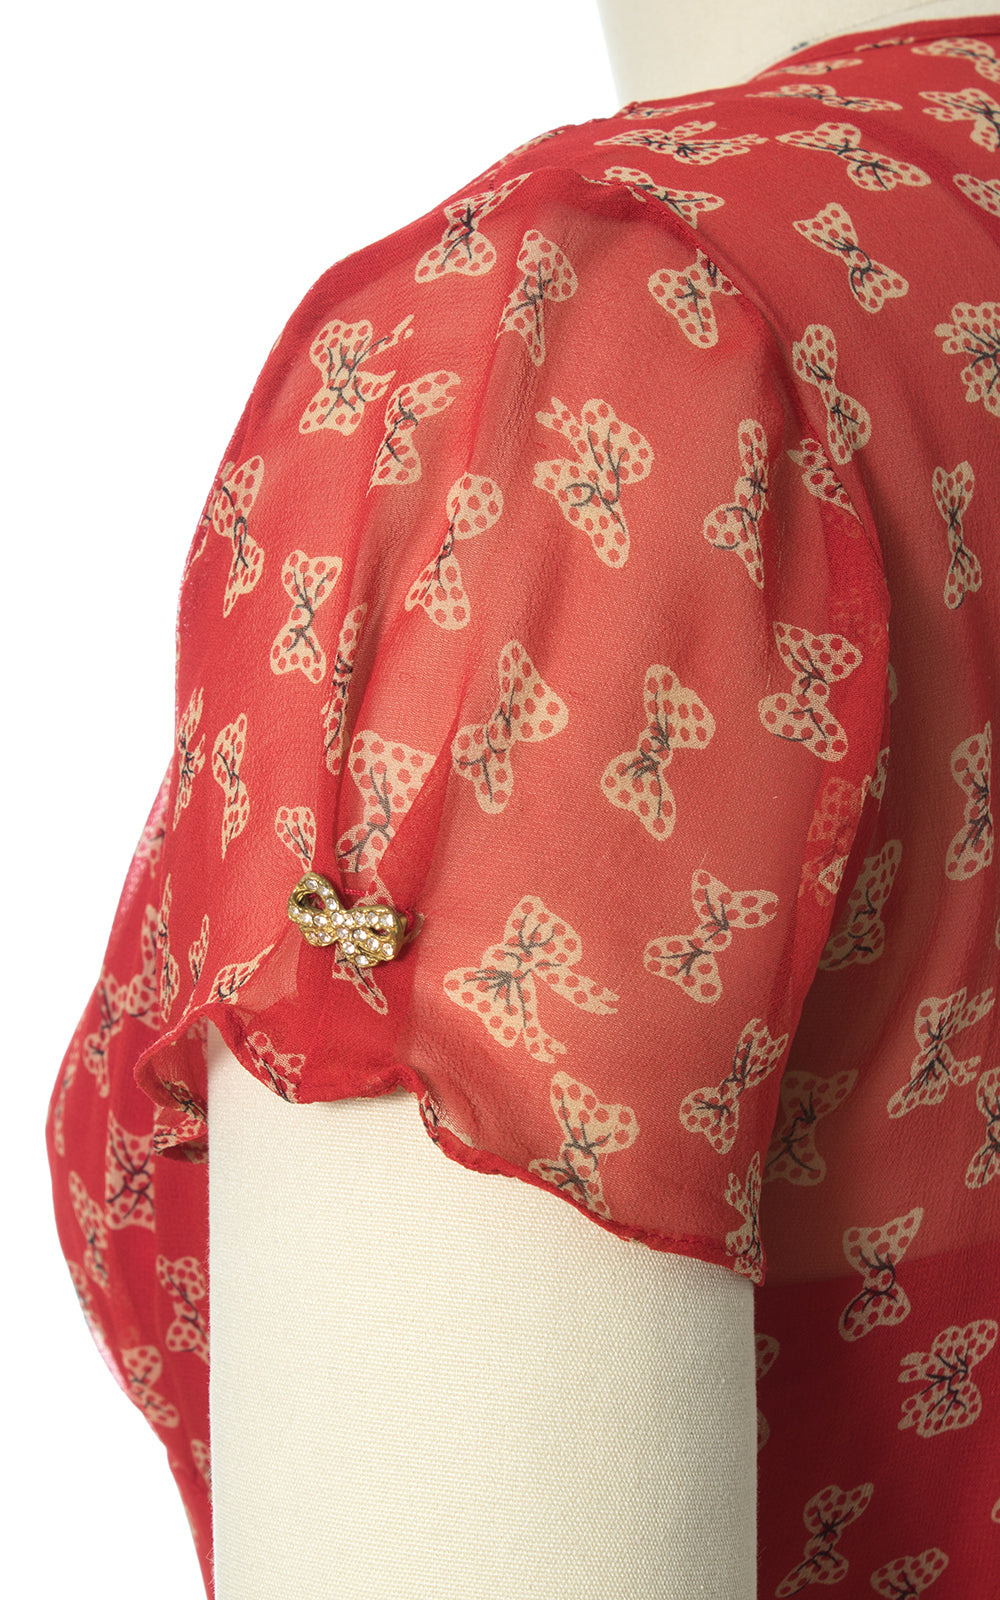 1990s Laundry by Shelli Segal Red Bow Novelty Print Silk Chiffon Dress